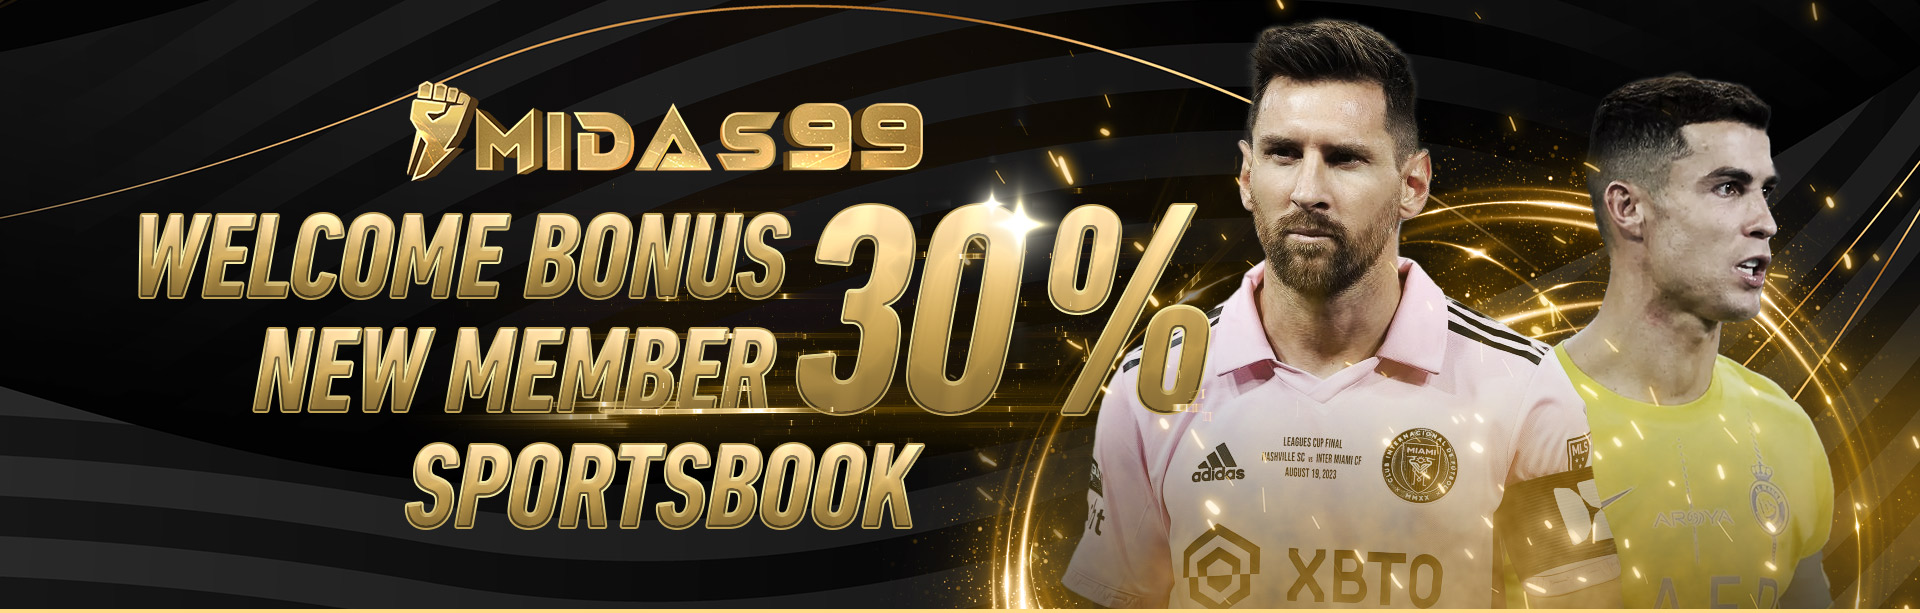 Welcome Bonus 30% Sportbook